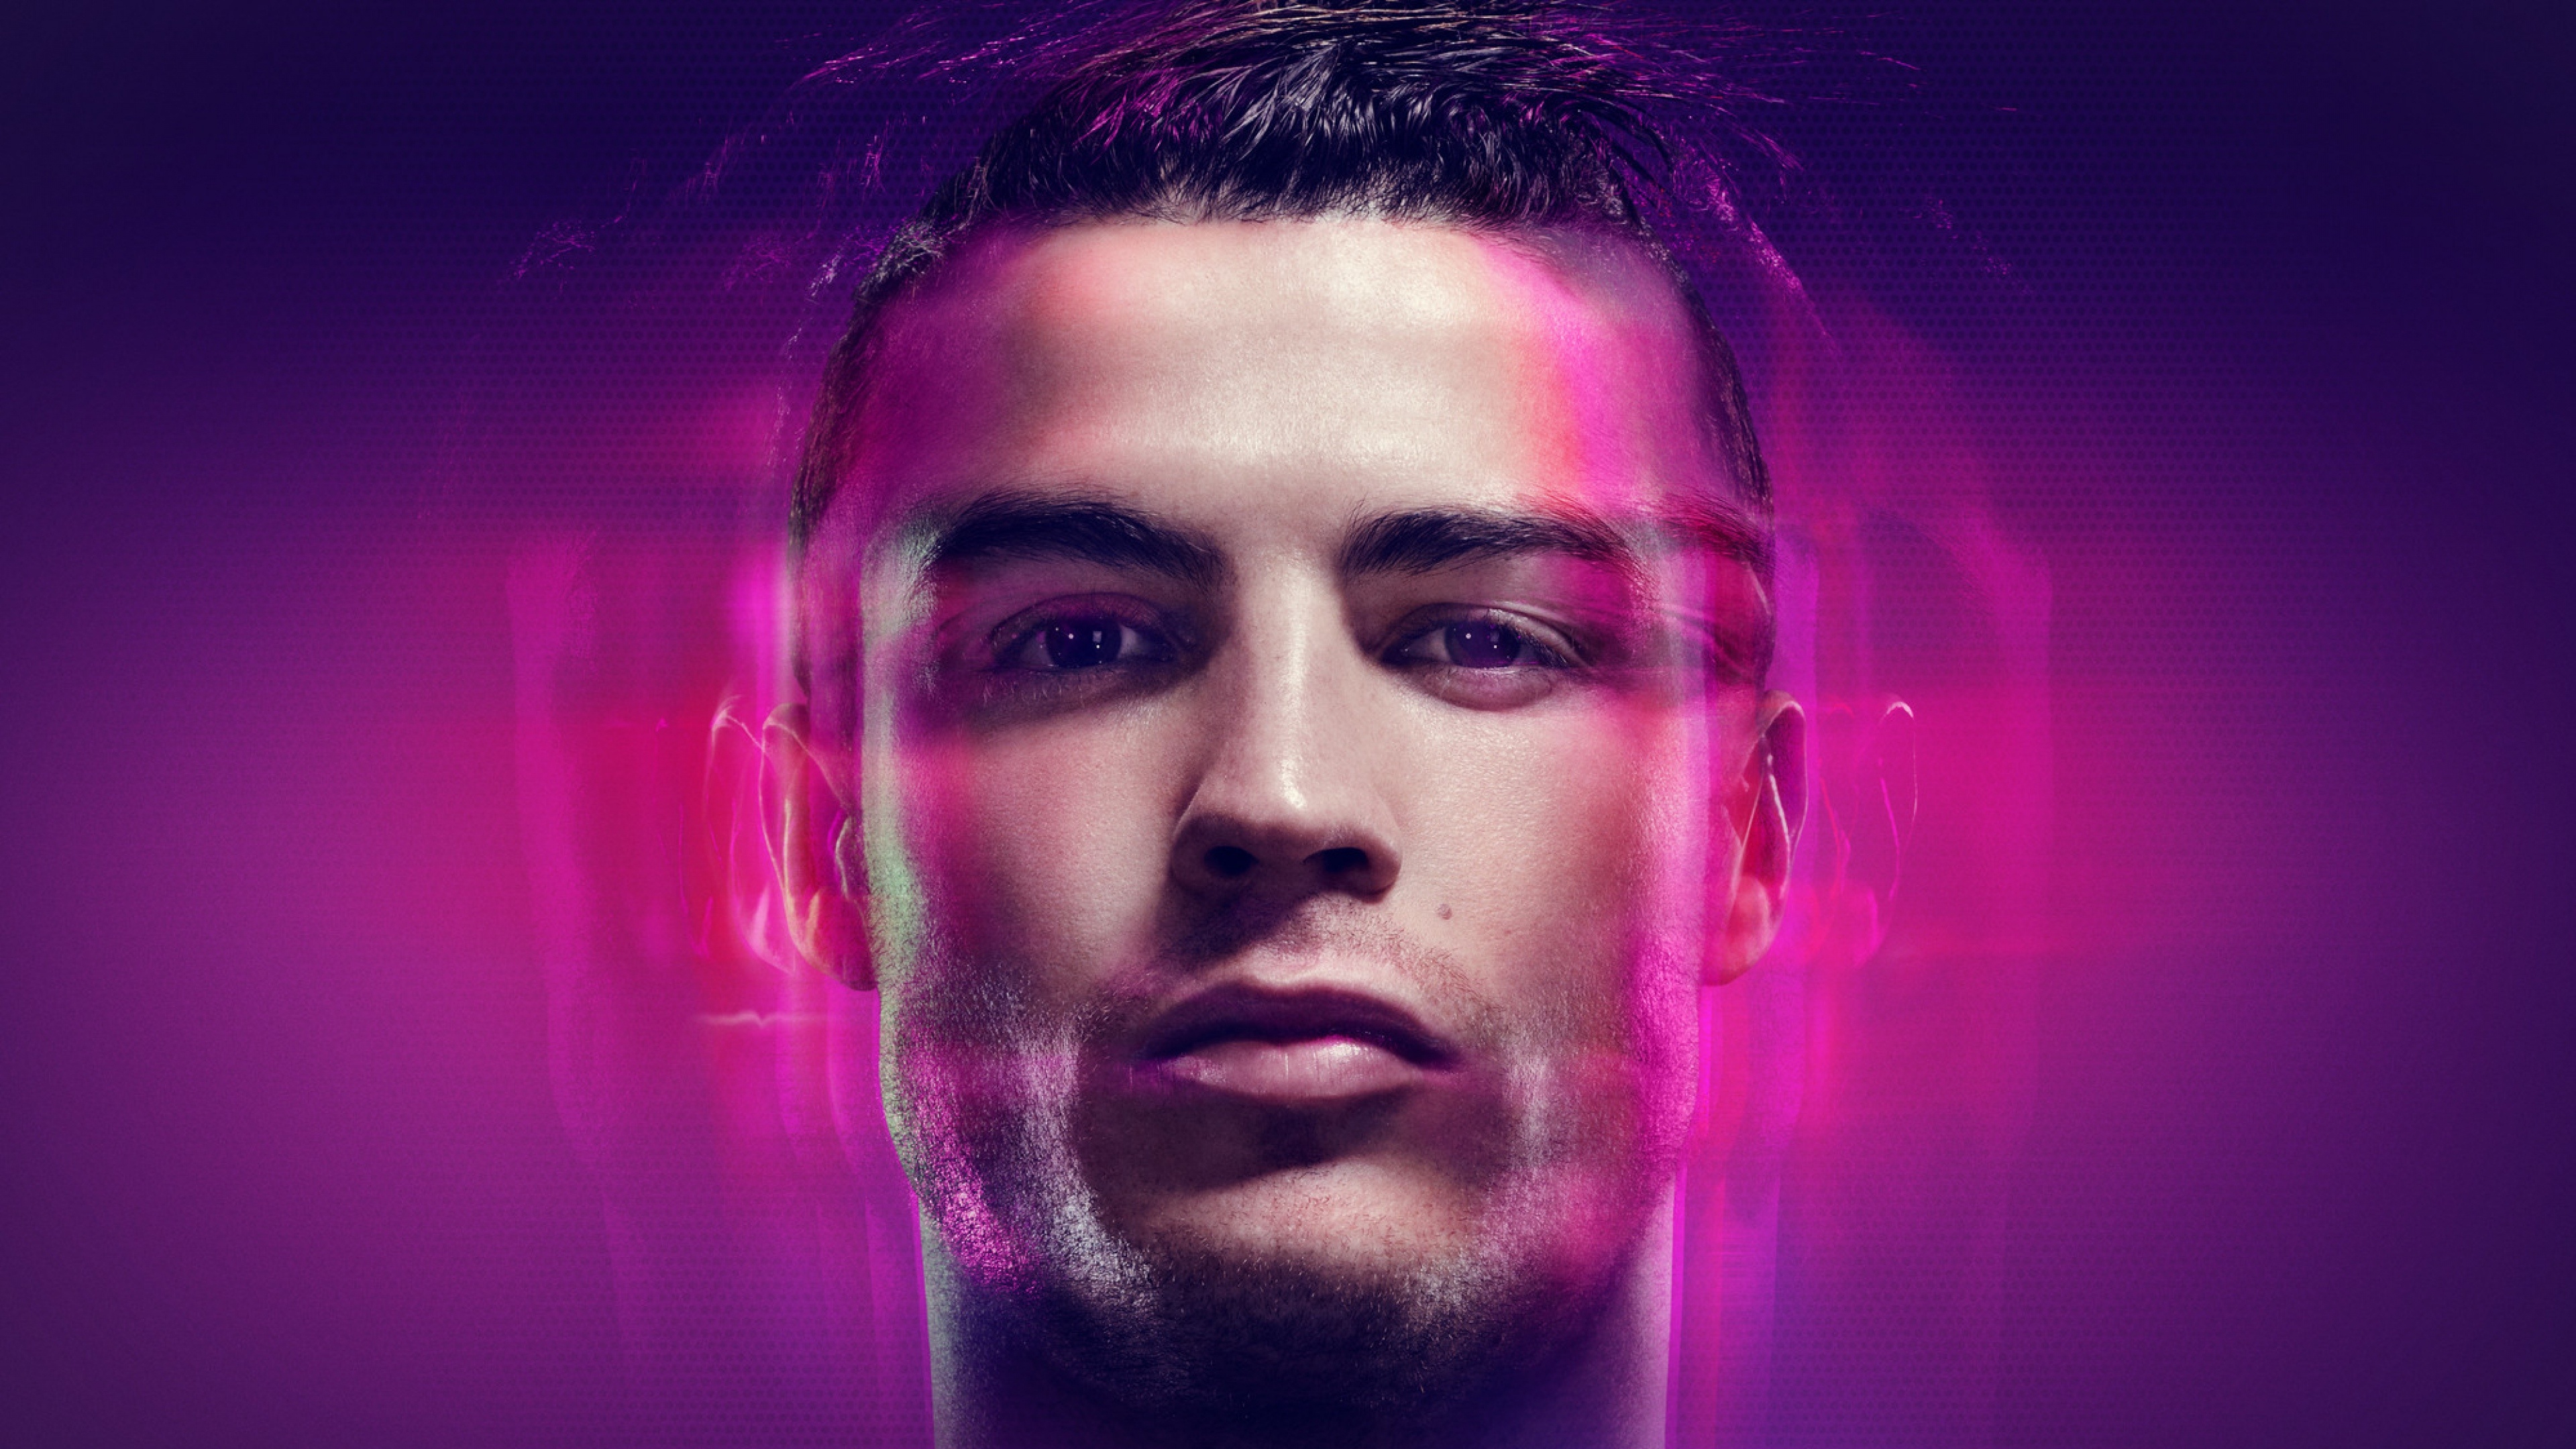 Cristiano Ronaldo 4K Wallpaper in jpg format for free download 4k Wallpaper